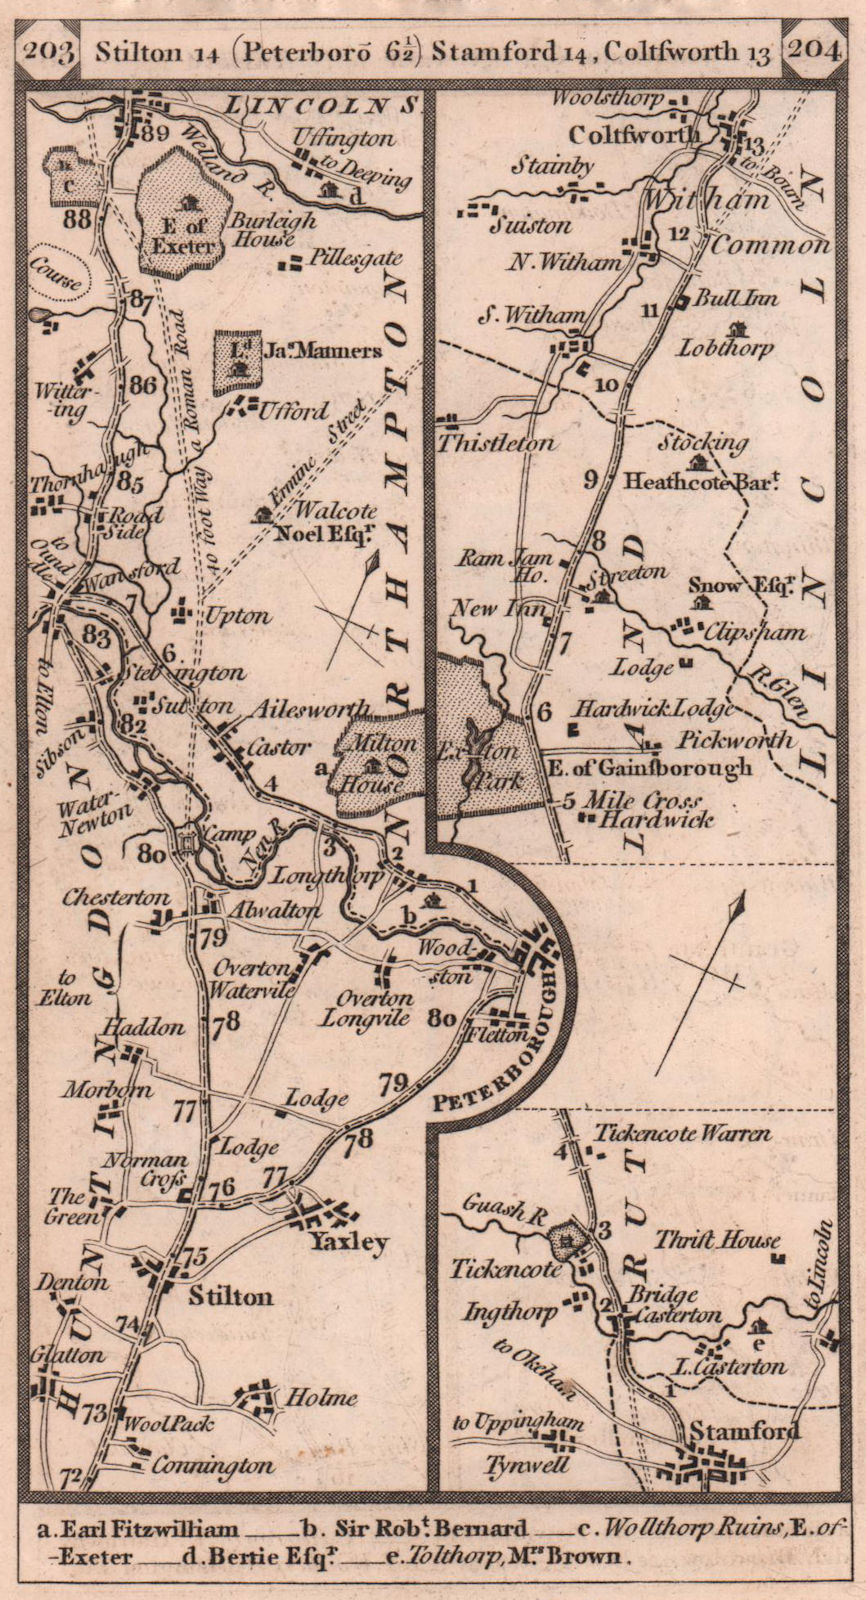 Stilton-Peterborough-Stamford-Colsterworth road strip map PATERSON 1803